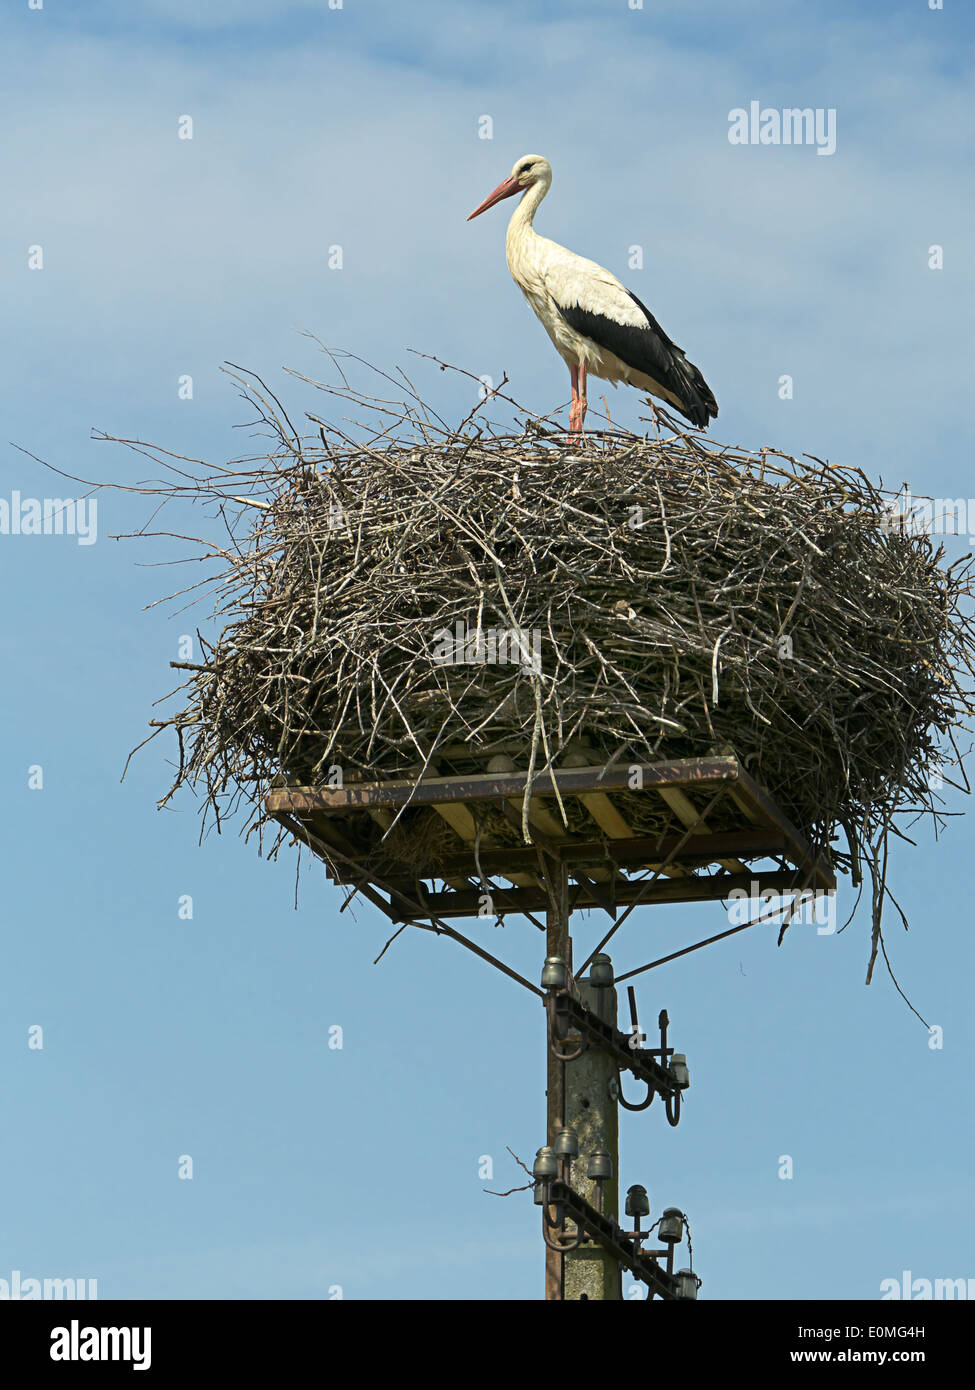 White stork in its nest over blue sky Stock Photo